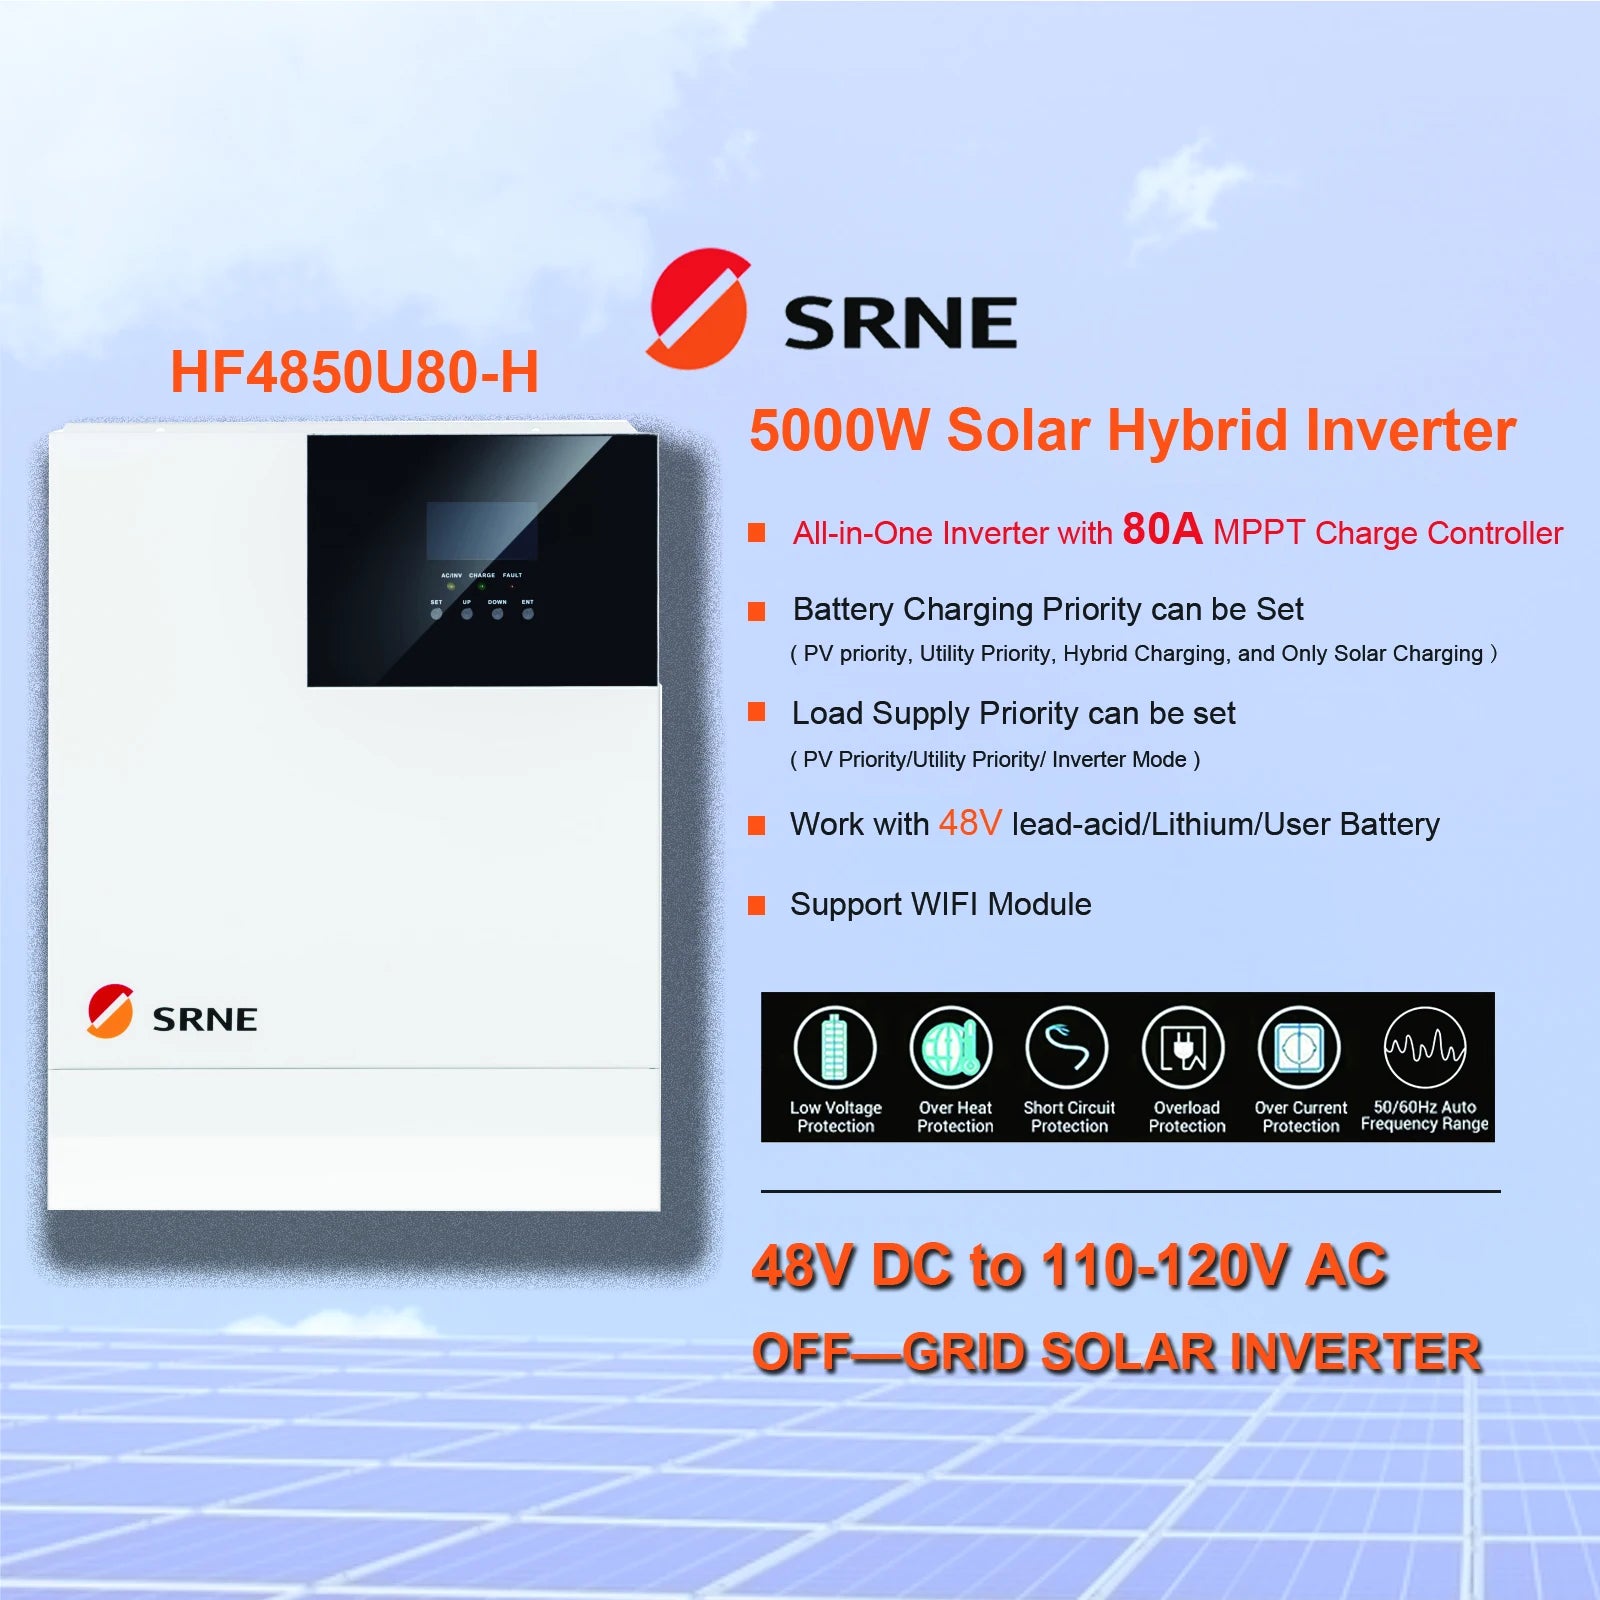 SRNE 5000W 48V Hybrid Inversor, Hybrid inverter with solar charger, supports 48V battery and 5000W power output.